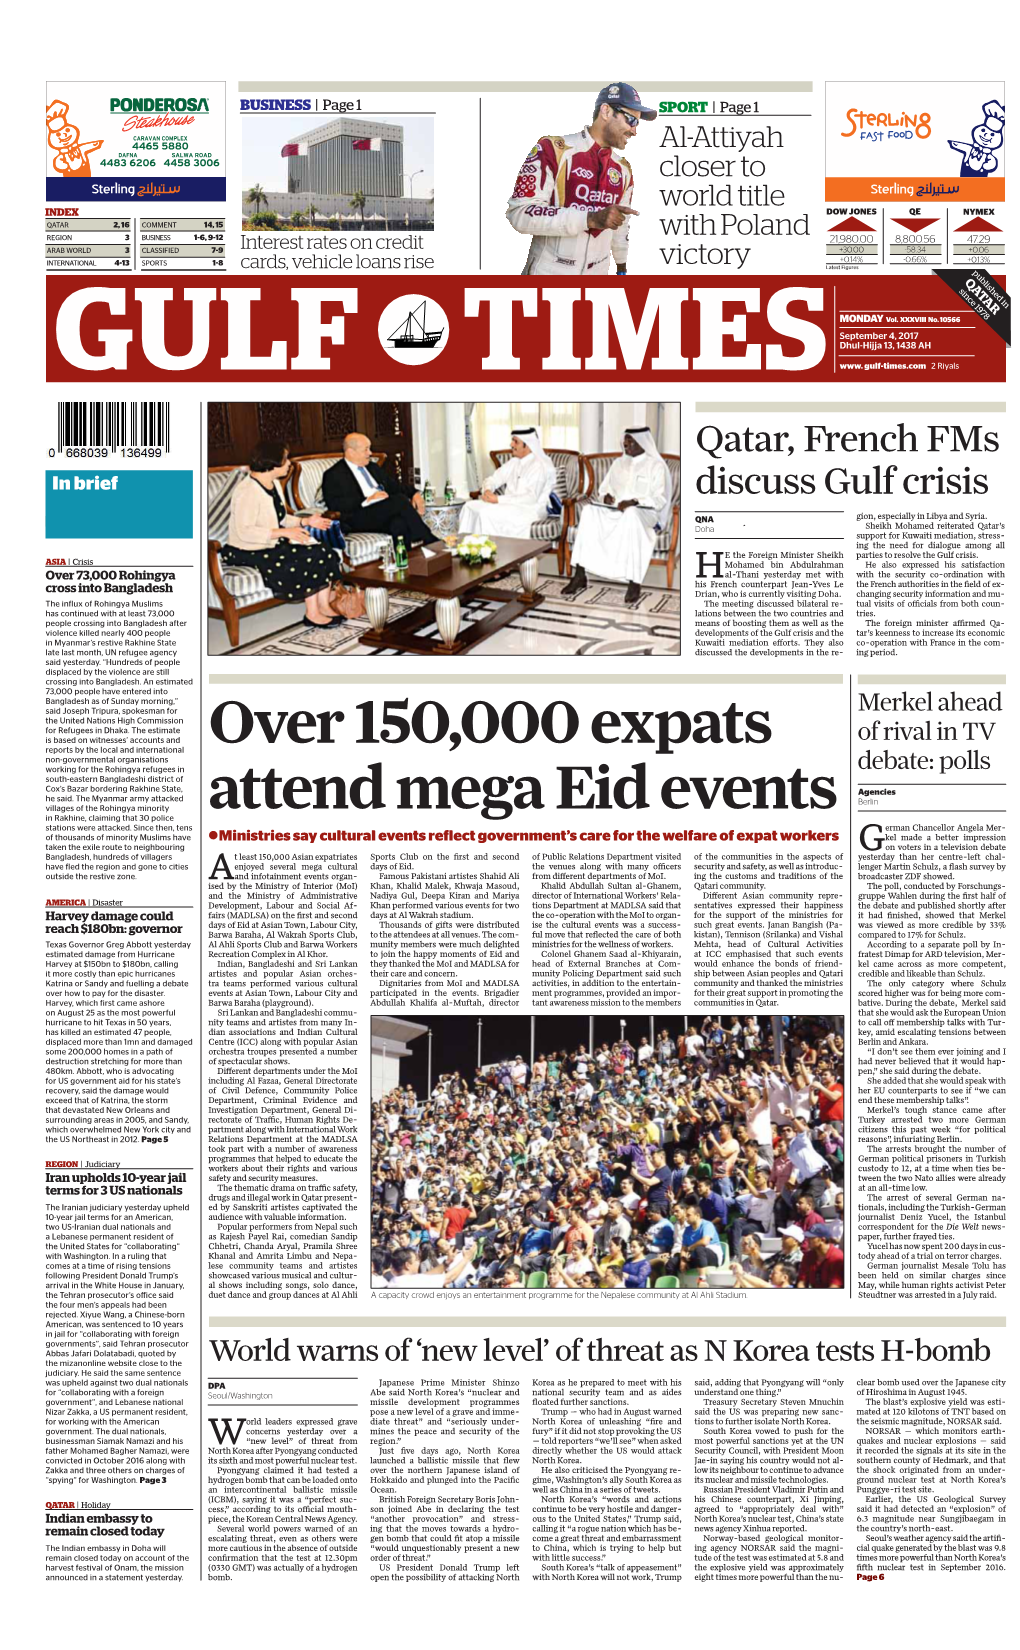 Over 150,000 Expats Attend Mega Eid Events